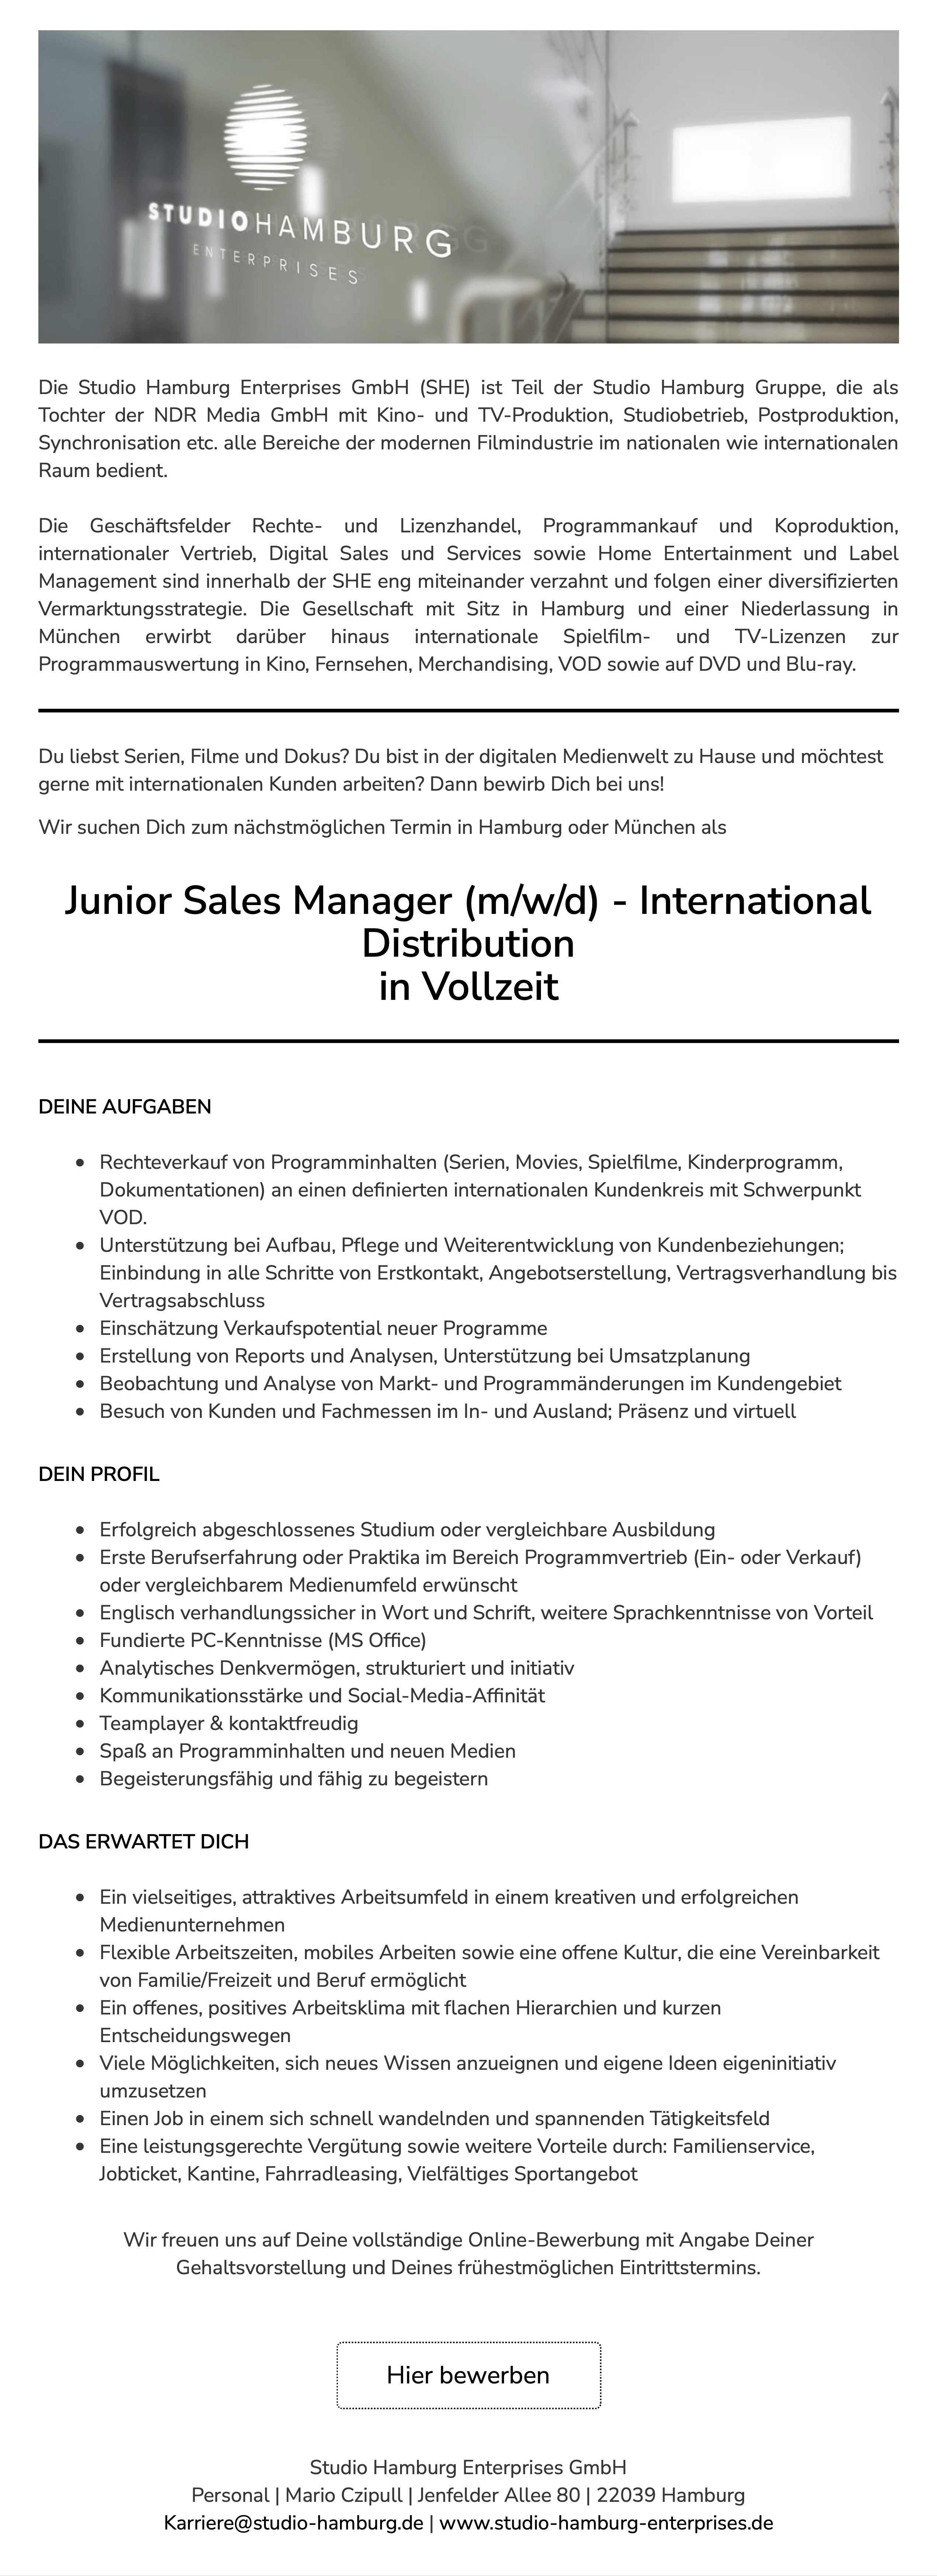 Junior Sales Manager (m/w/d) - International Distribution